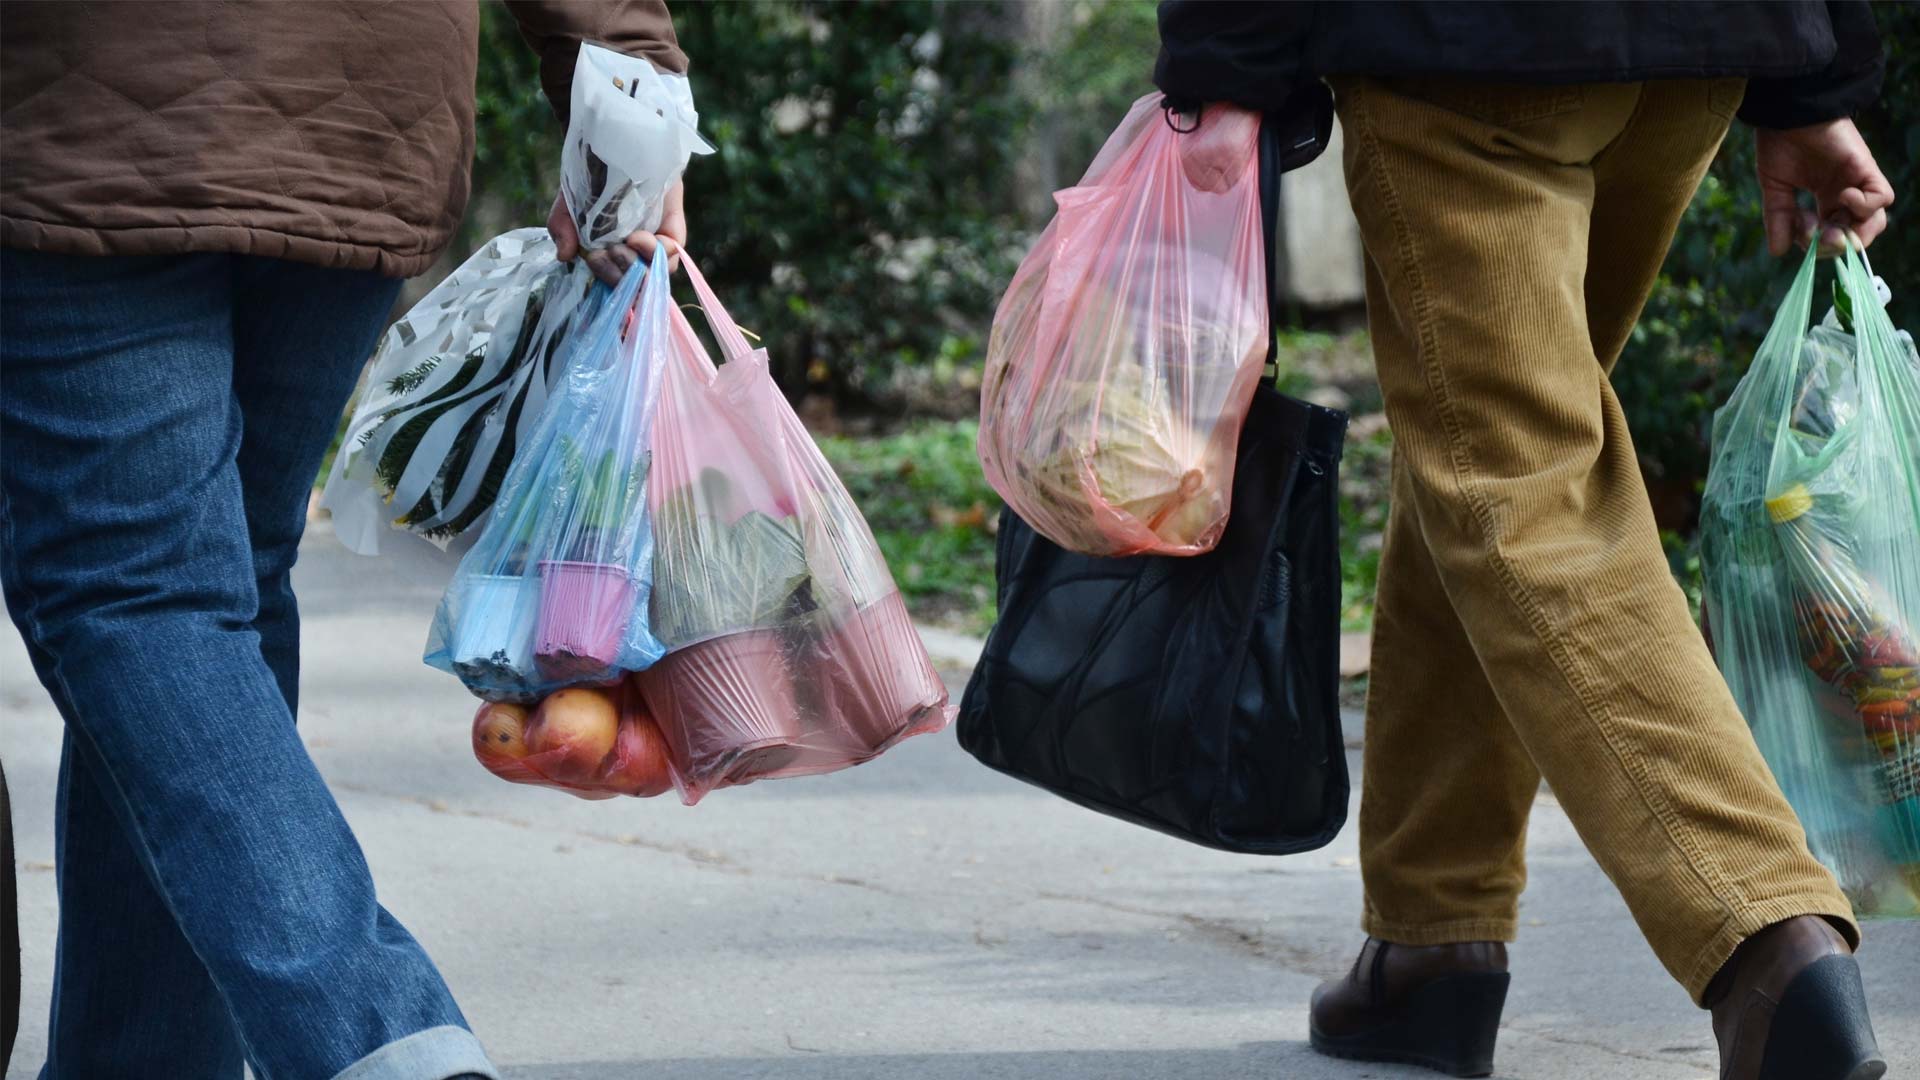 Pretail Plastic Storage Sacks for rough use or Sack Races, Big